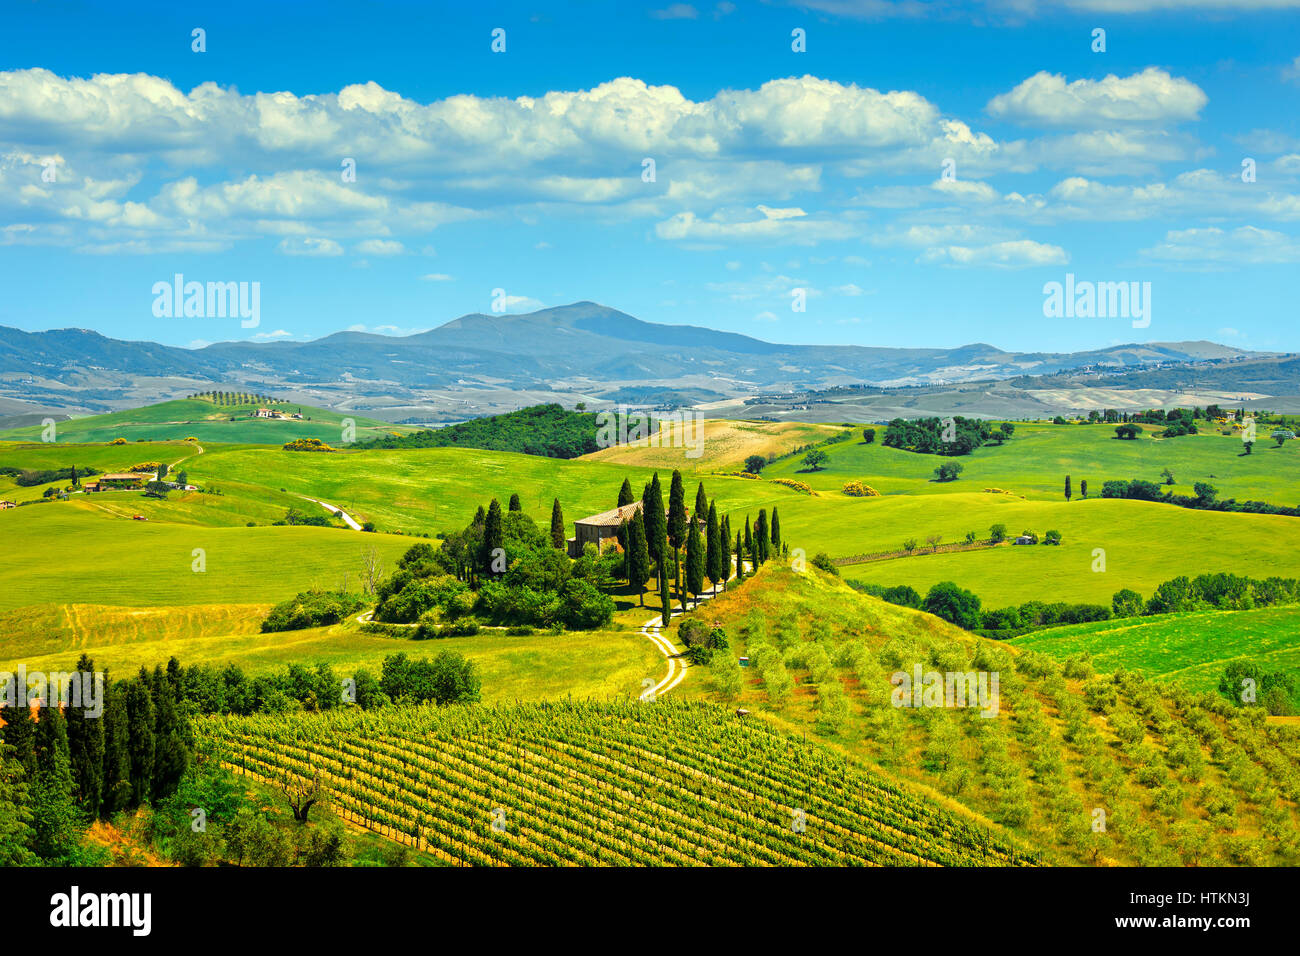 Tuscany, farmland and cypress trees country landscape, green fields. Italy, Europe. Stock Photo